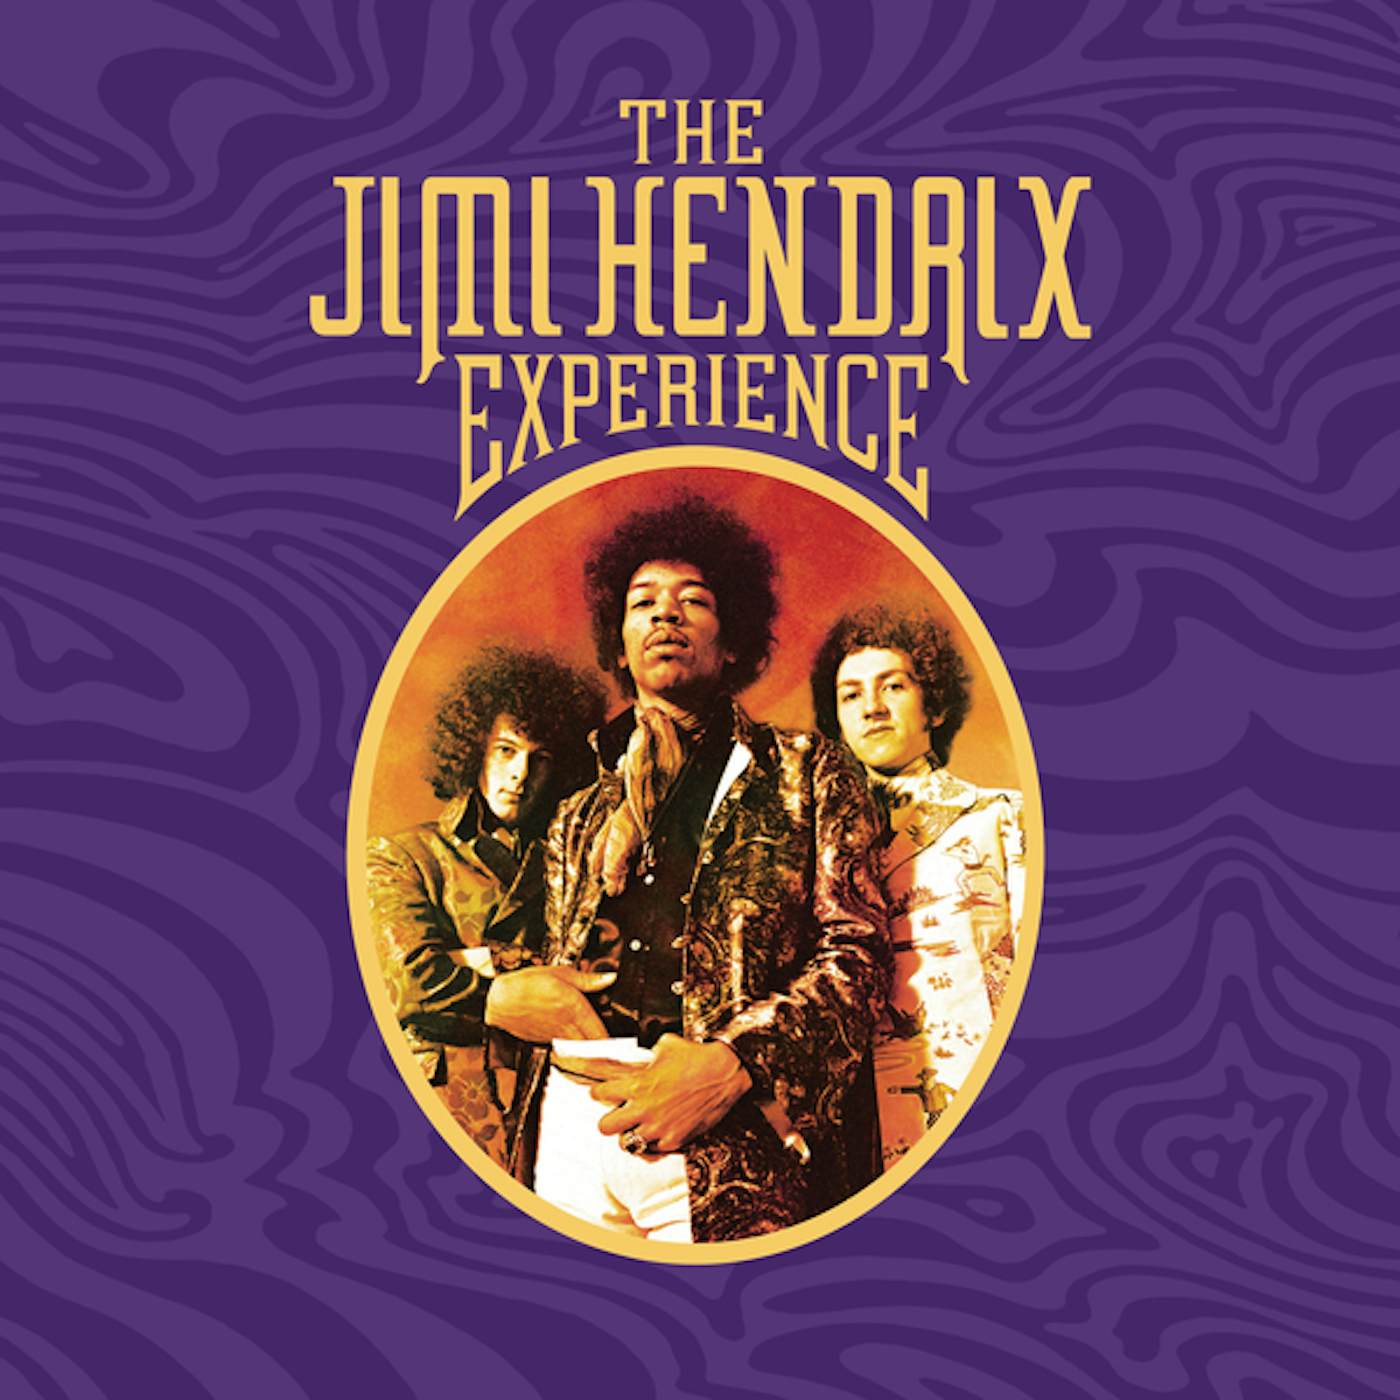 Jimi Hendrix Experience  (8LP / 180g / Box Set) (Vinyl)